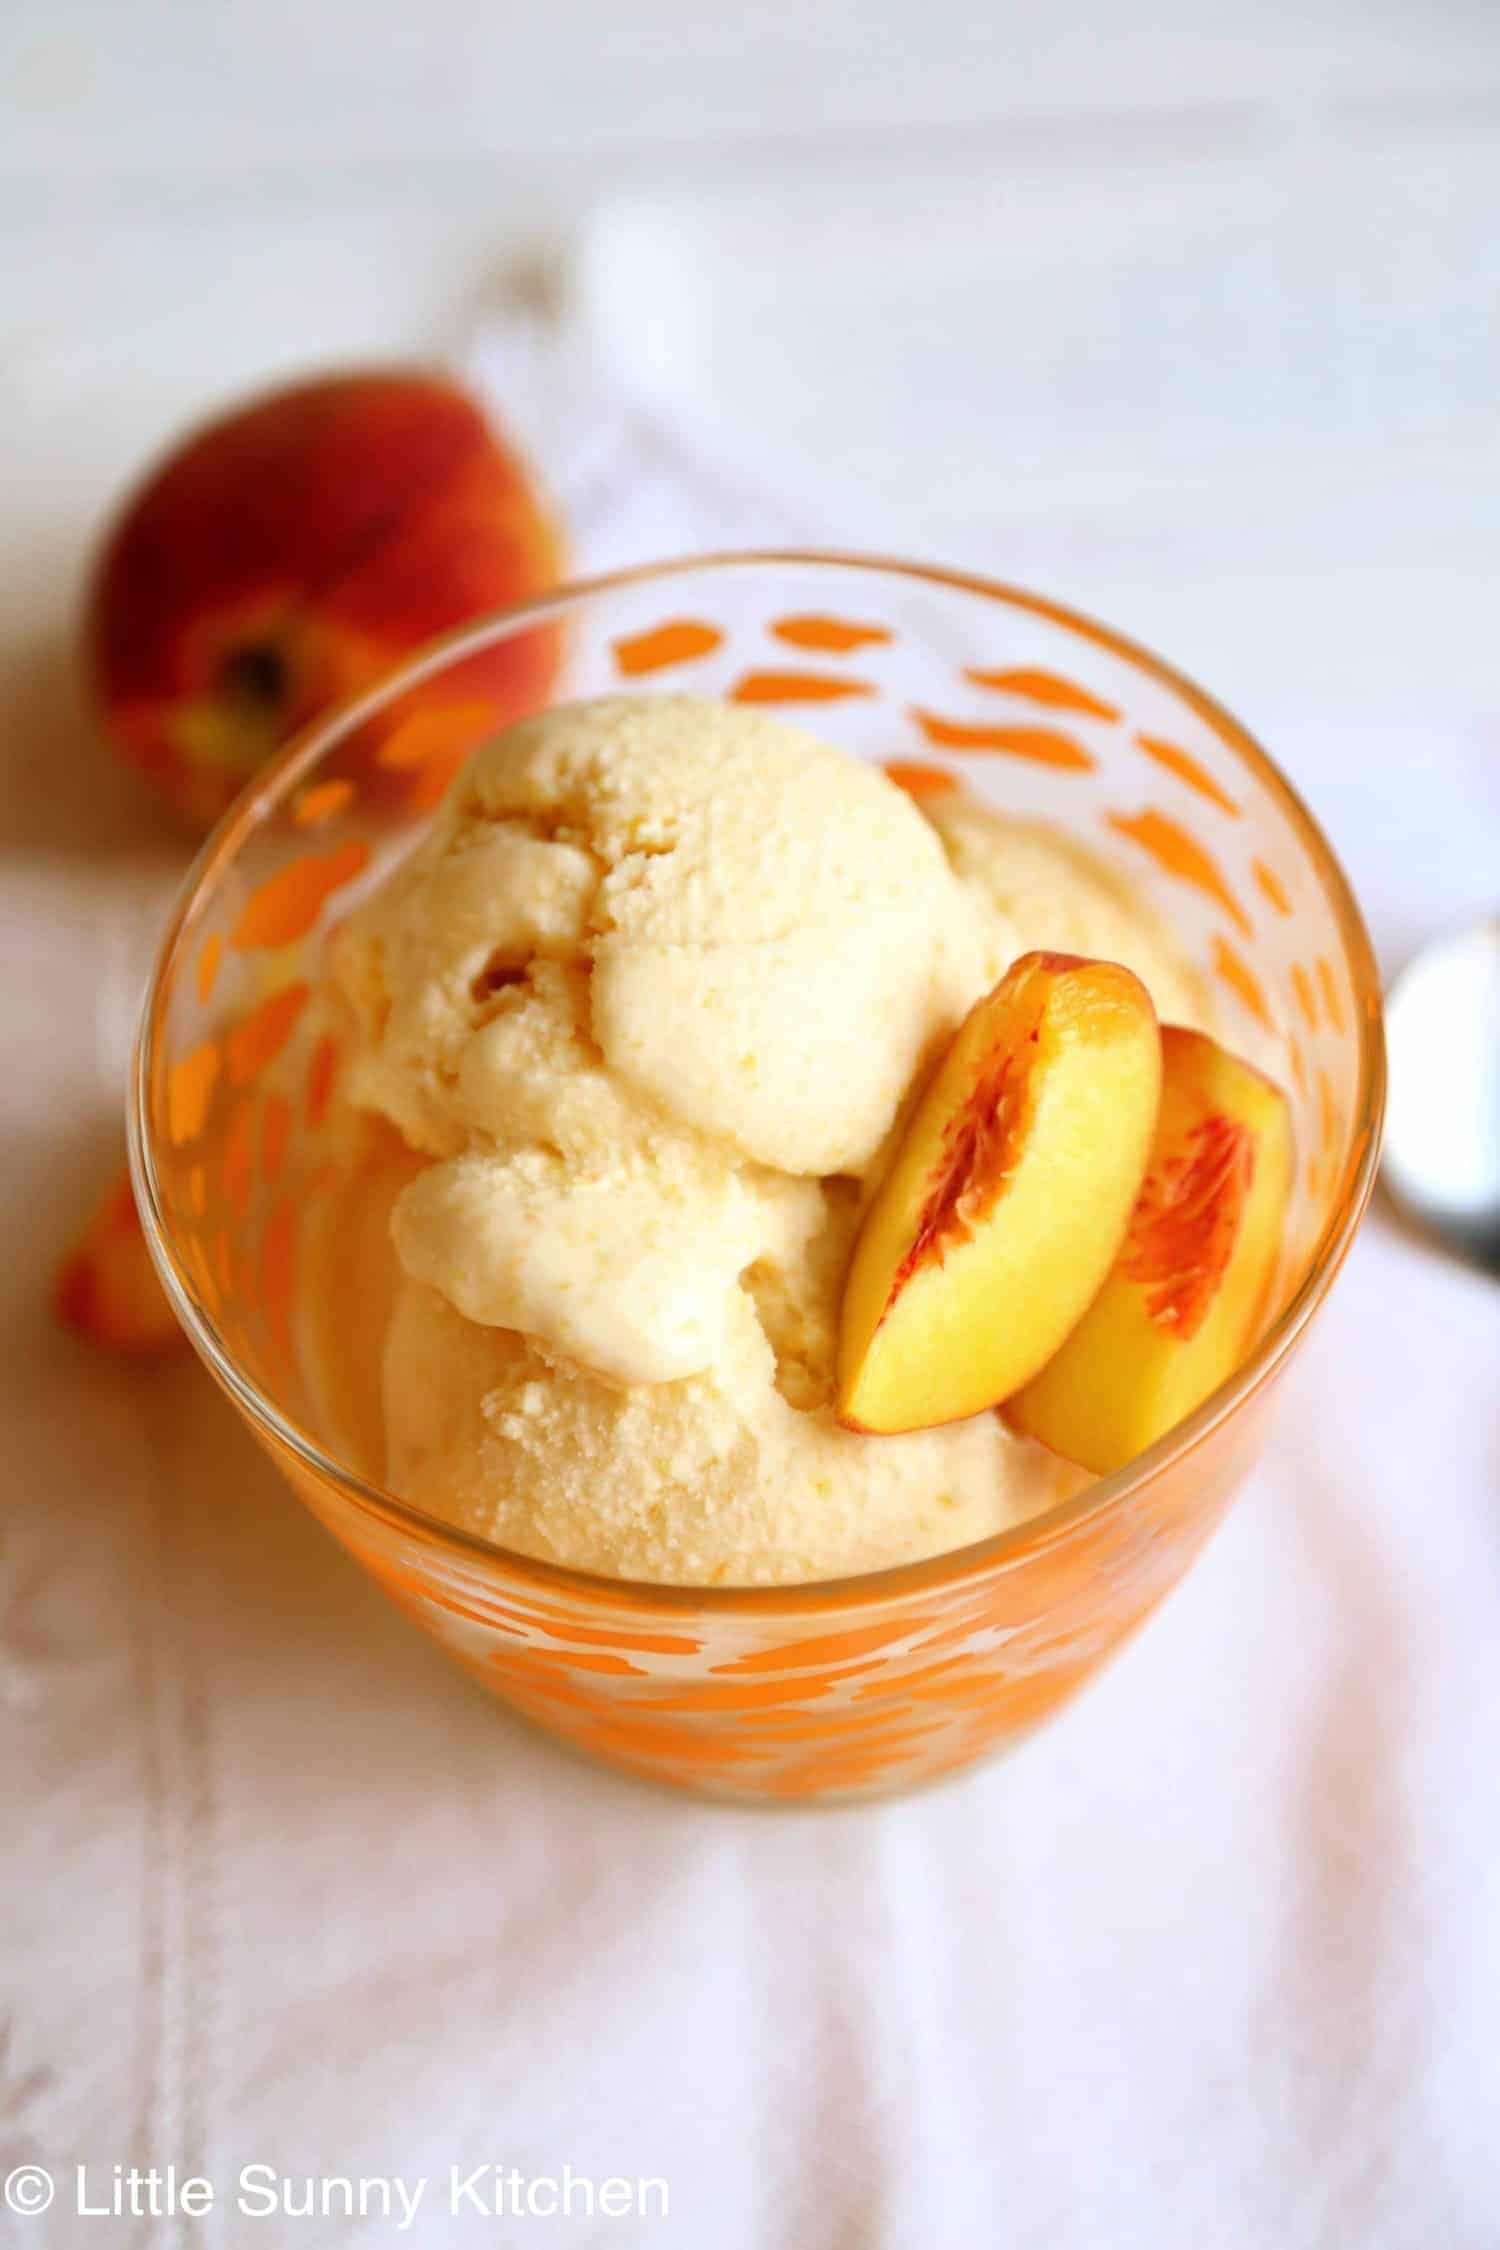 Five minute healthy no churn peach ice cream made with natural yogurt